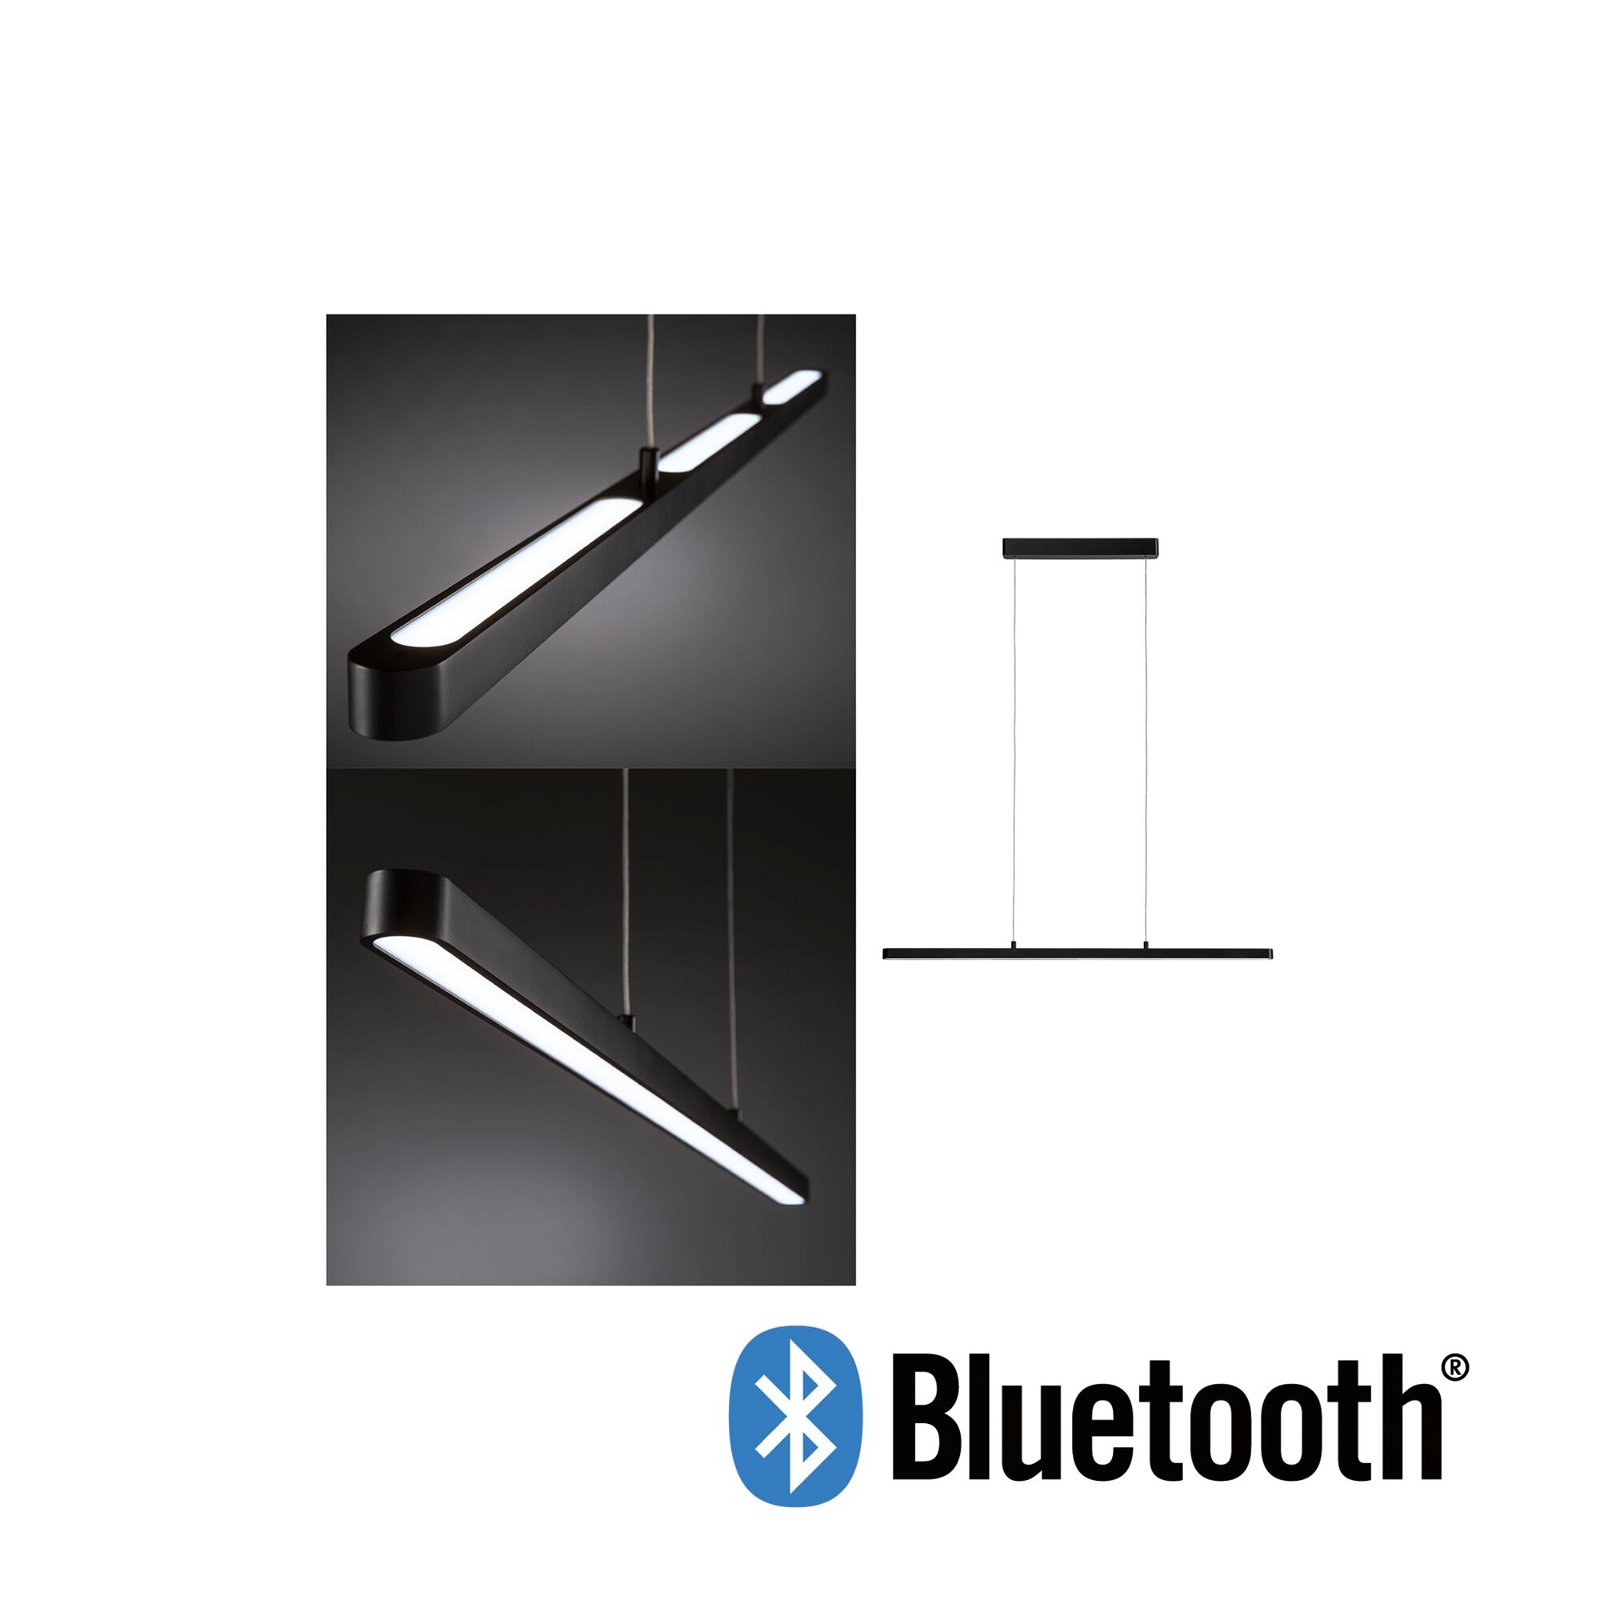 LED-hanglamp Smart Home Bluetooth Lento Tunable White 1800lm 43W Zwart dimbaar